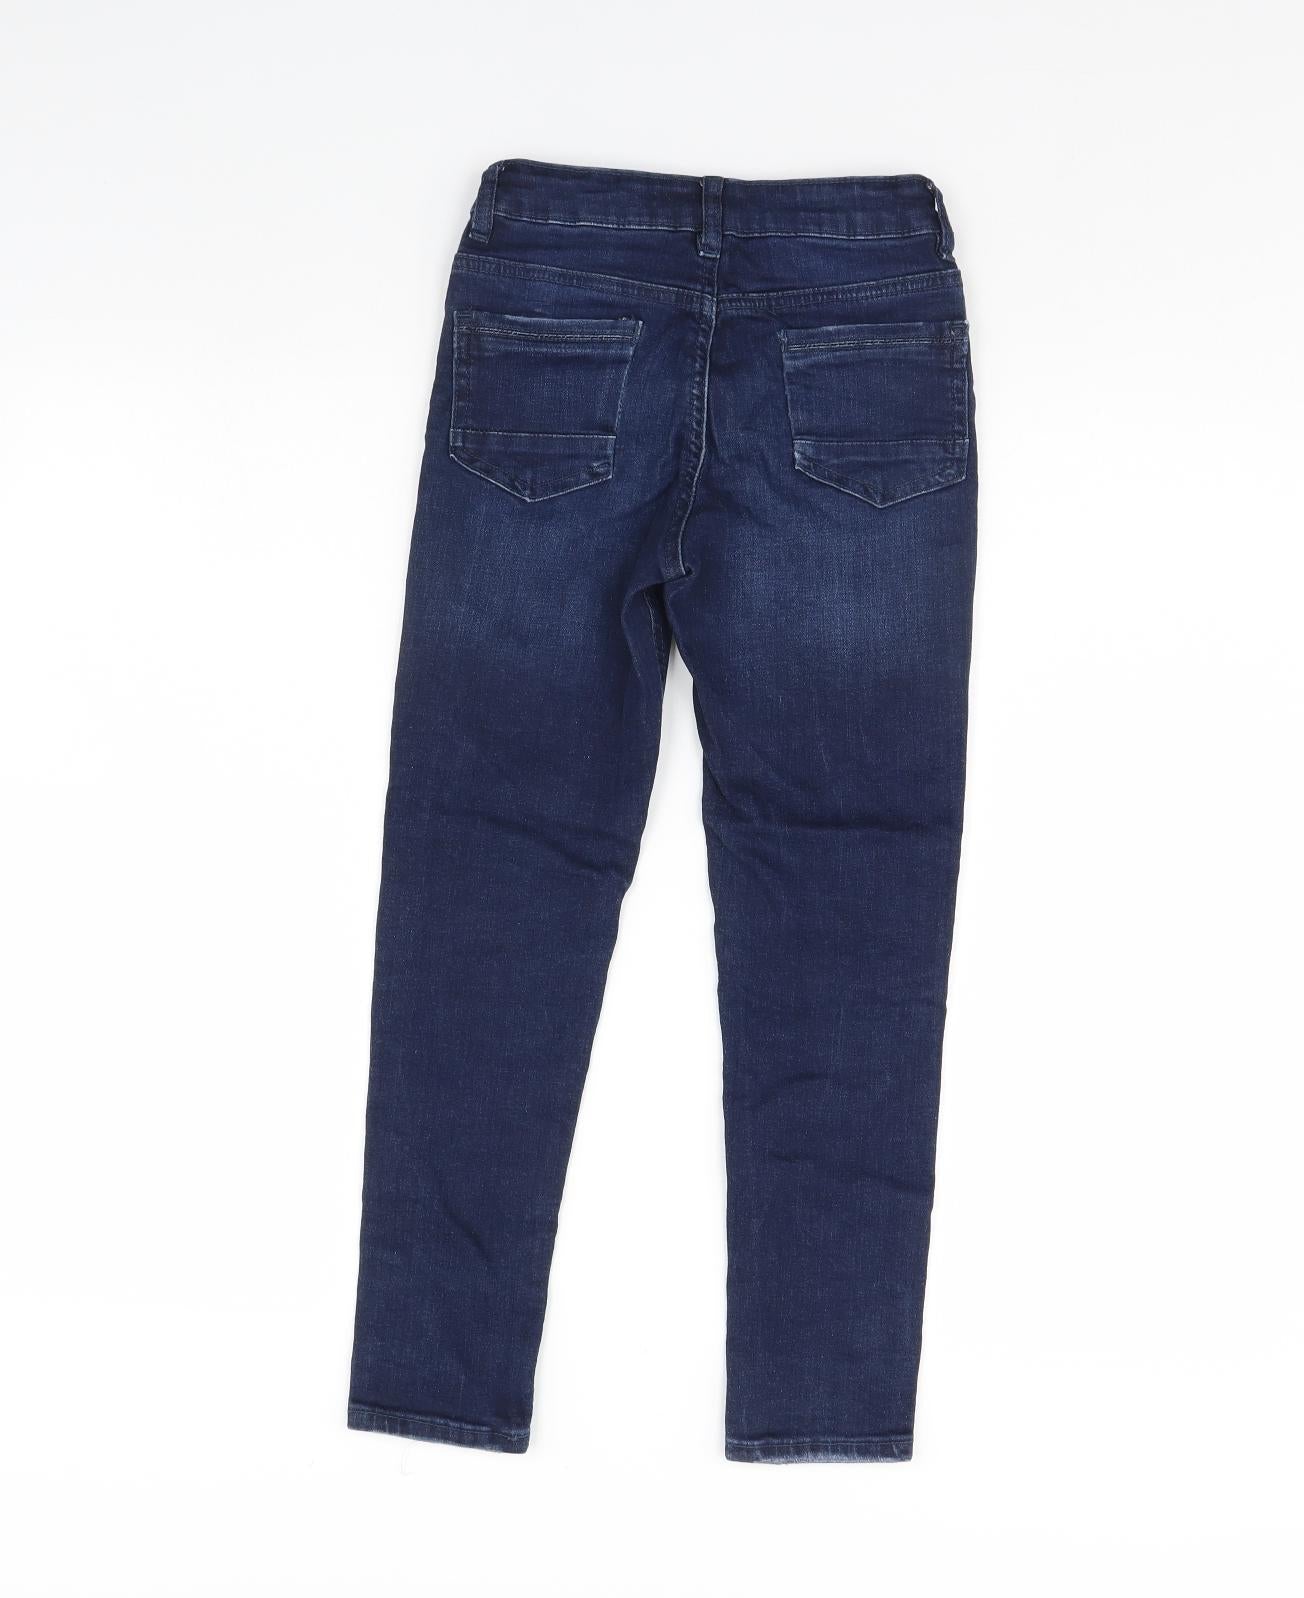 Denim & Co. Boys Blue   Skinny Jeans Size 6 Years